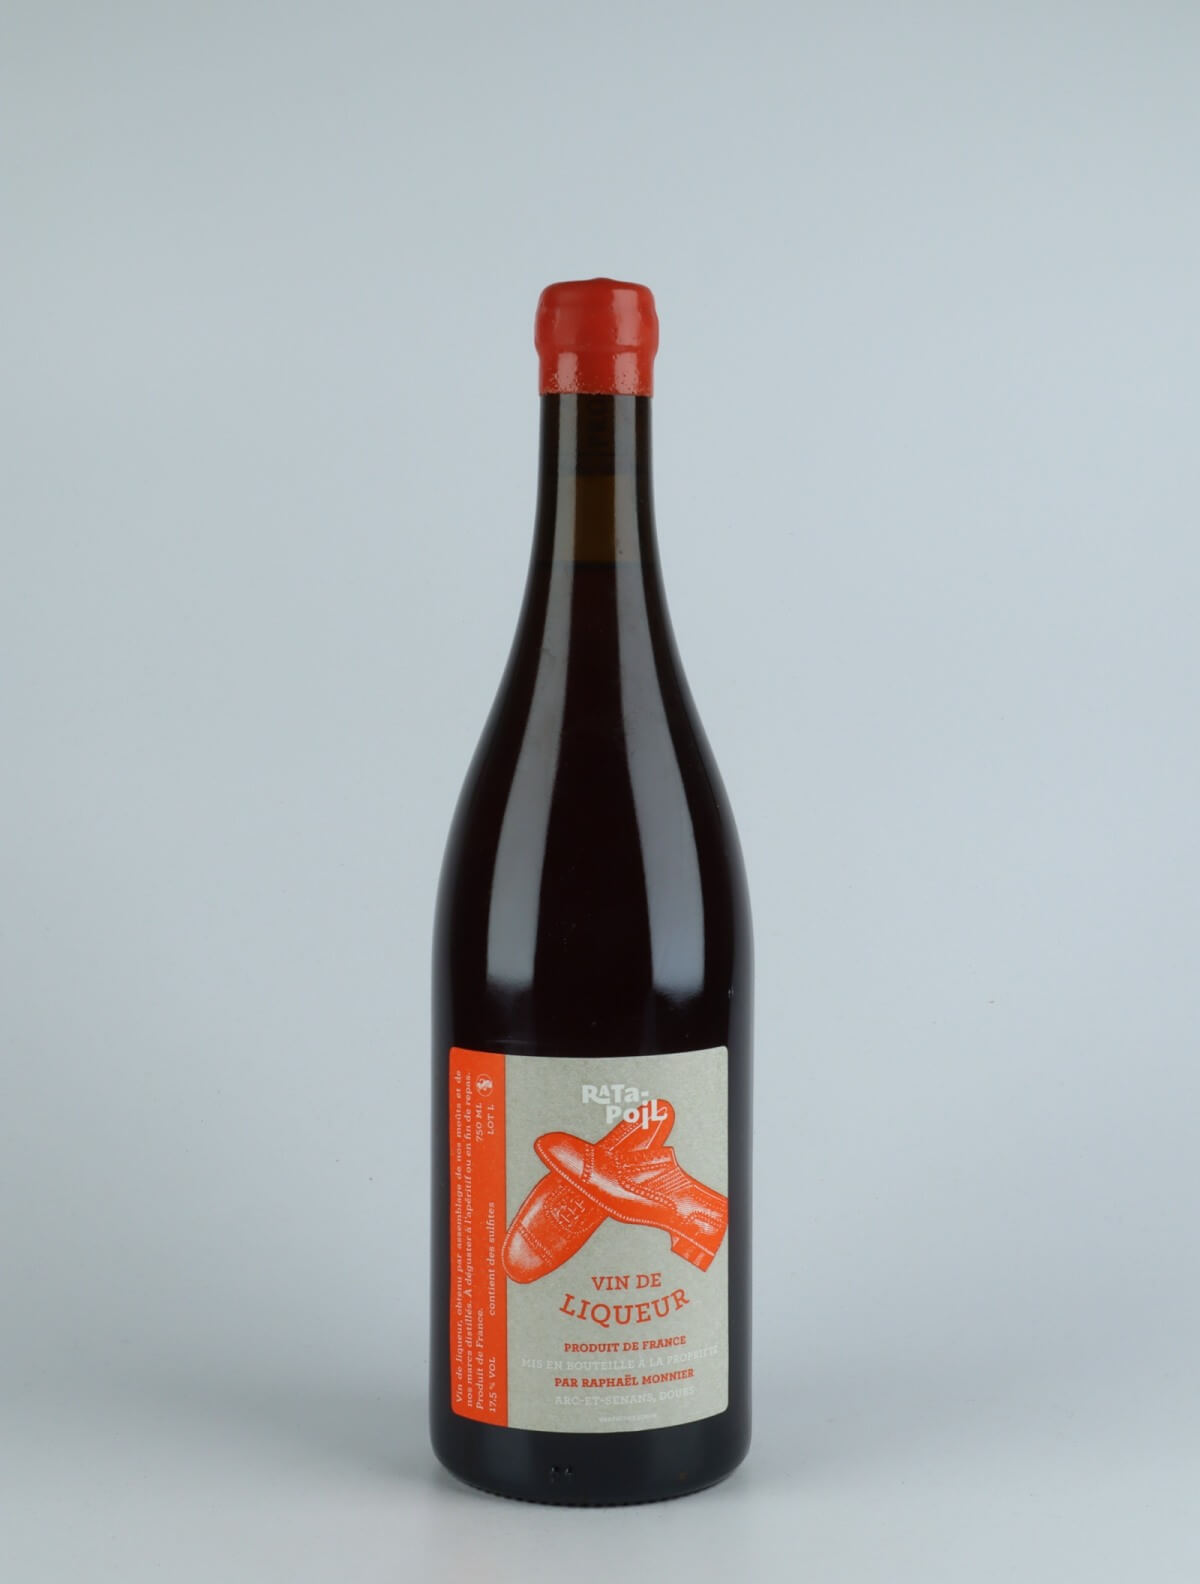 A bottle N.V. Vin de Liqueur Sweet wine from Domaine Ratapoil, Jura in France